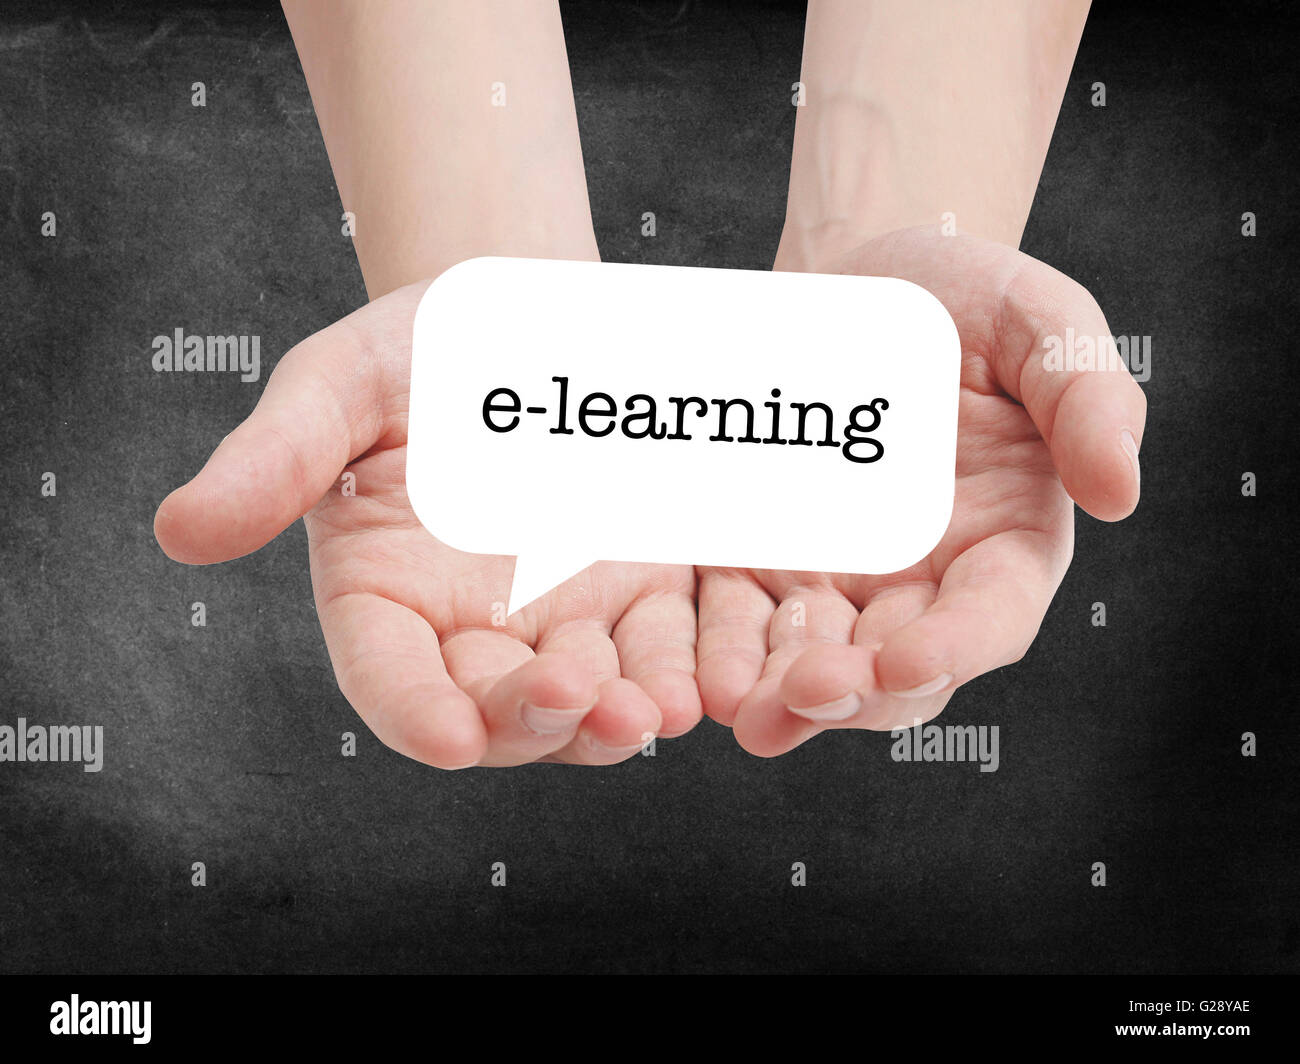 e-learning written on a speechbubble Stock Photo